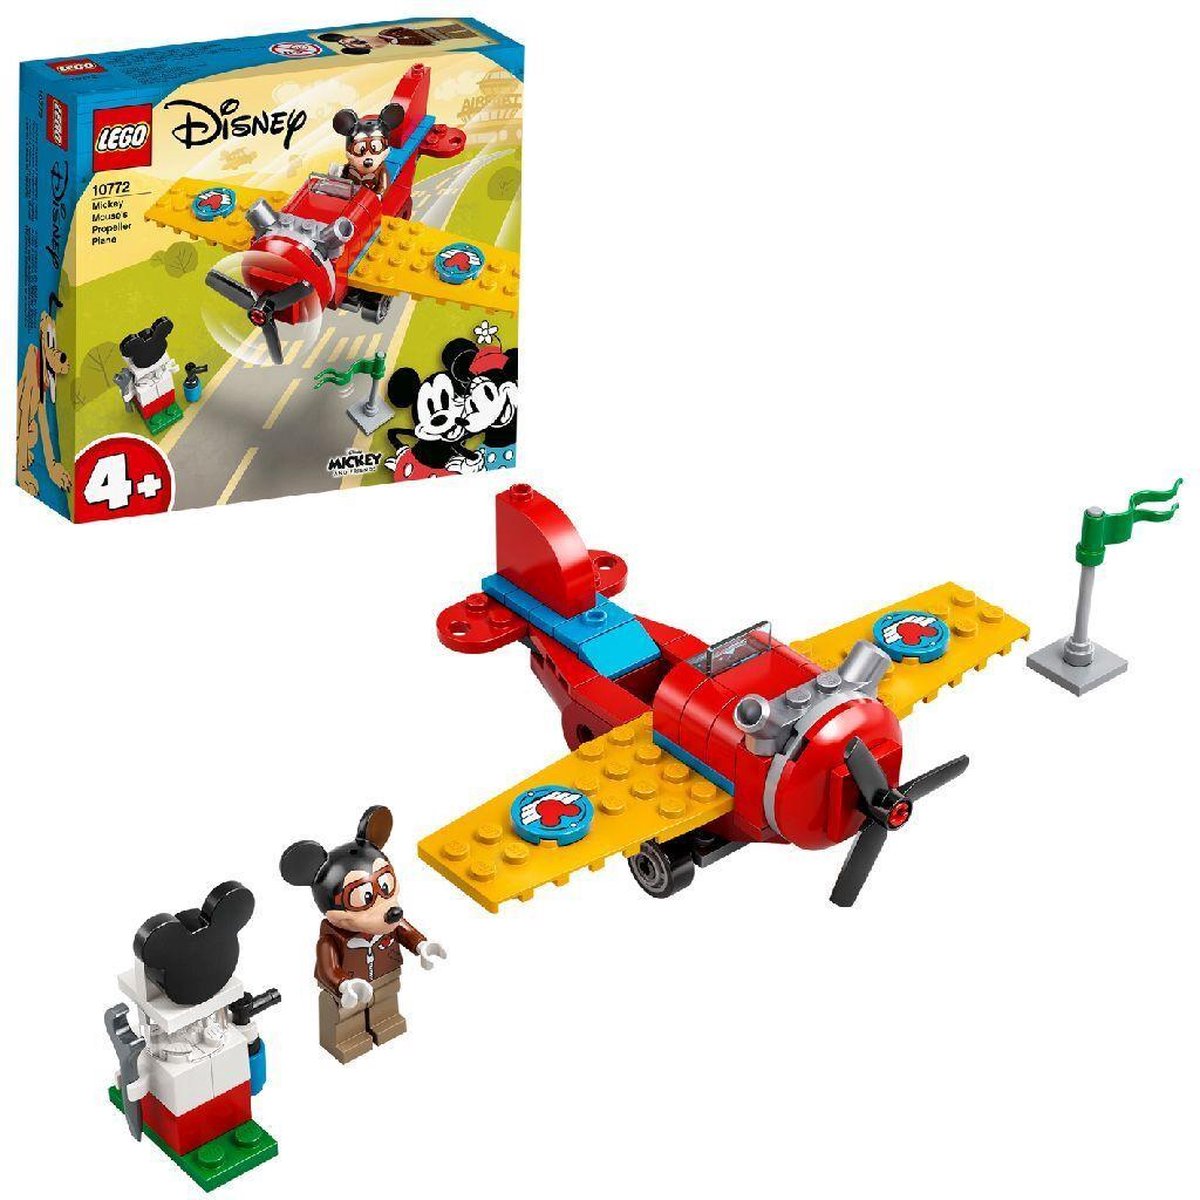 LEGO Disney Mickey Mouse propellervliegtuig - 10772